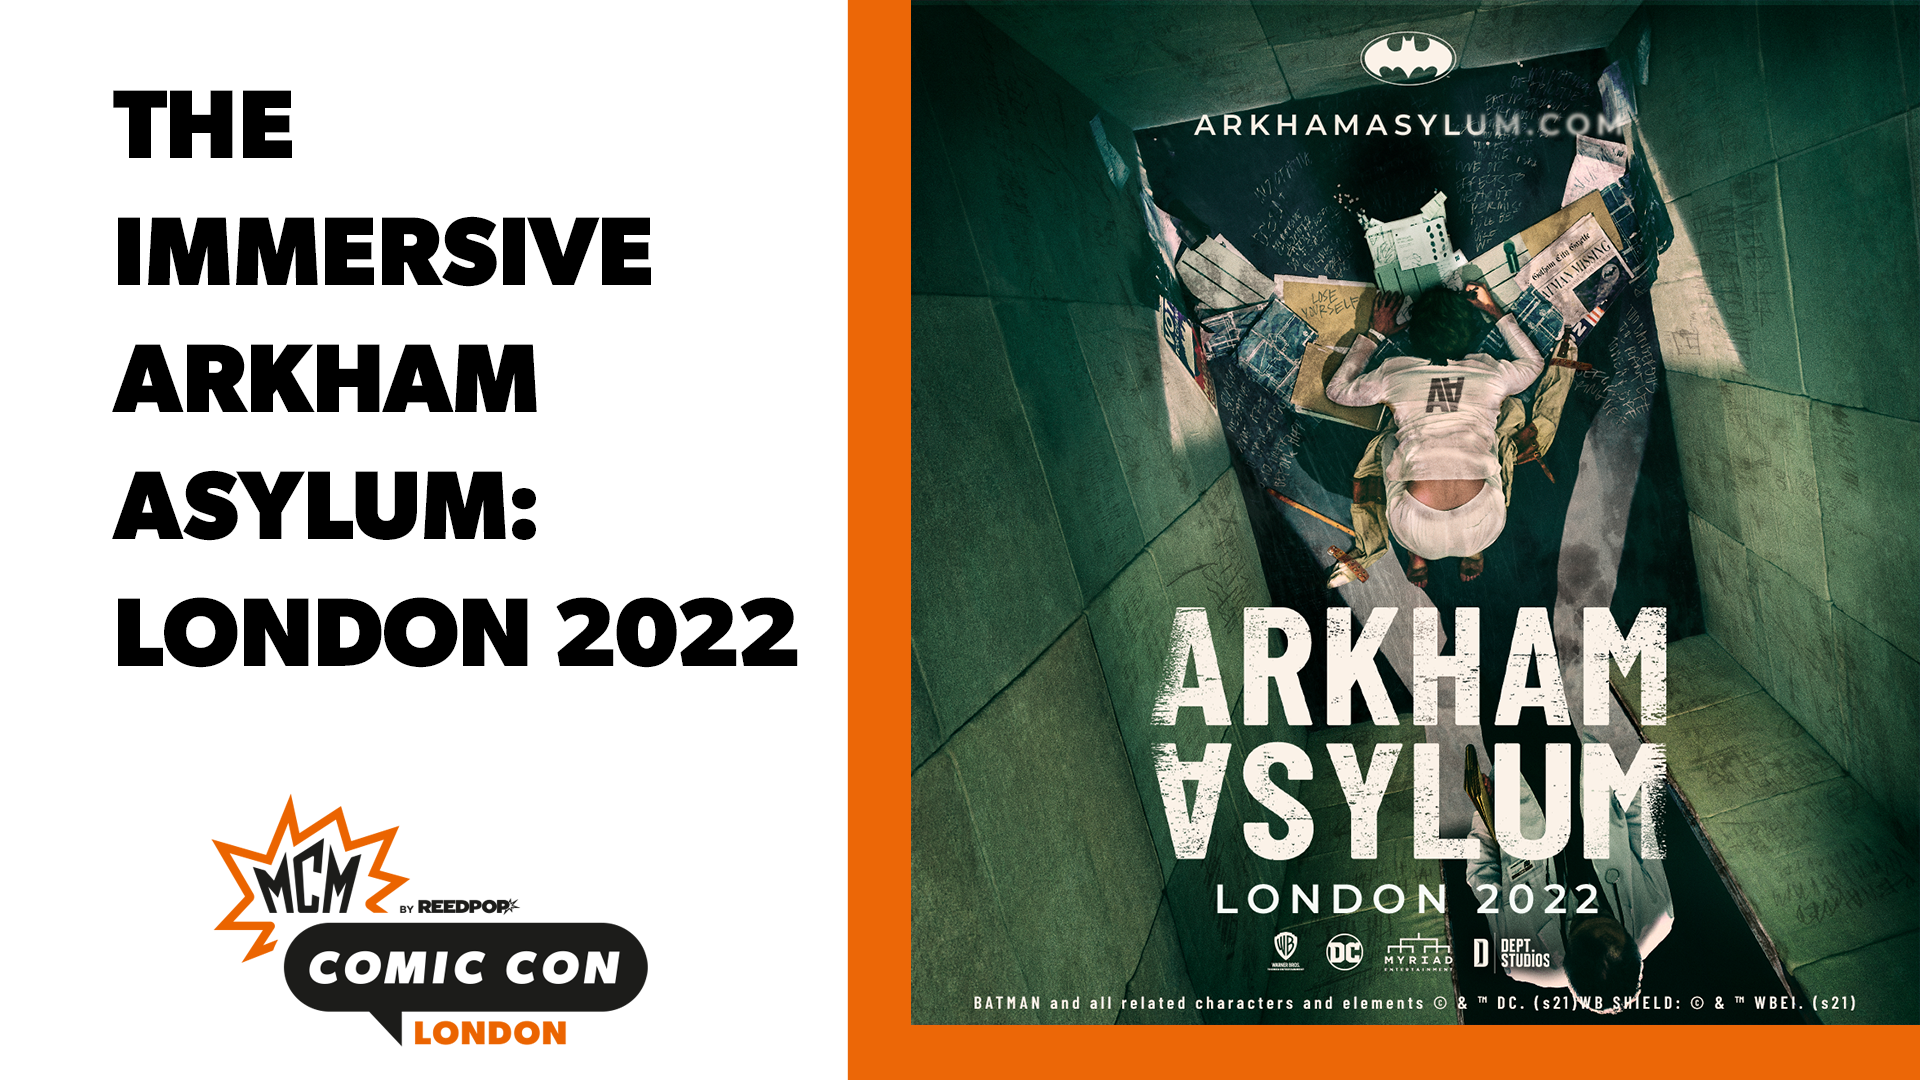 Image for MCM London 2021 | THE IMMERSIVE ARKHAM ASYLUM - LONDON 2022